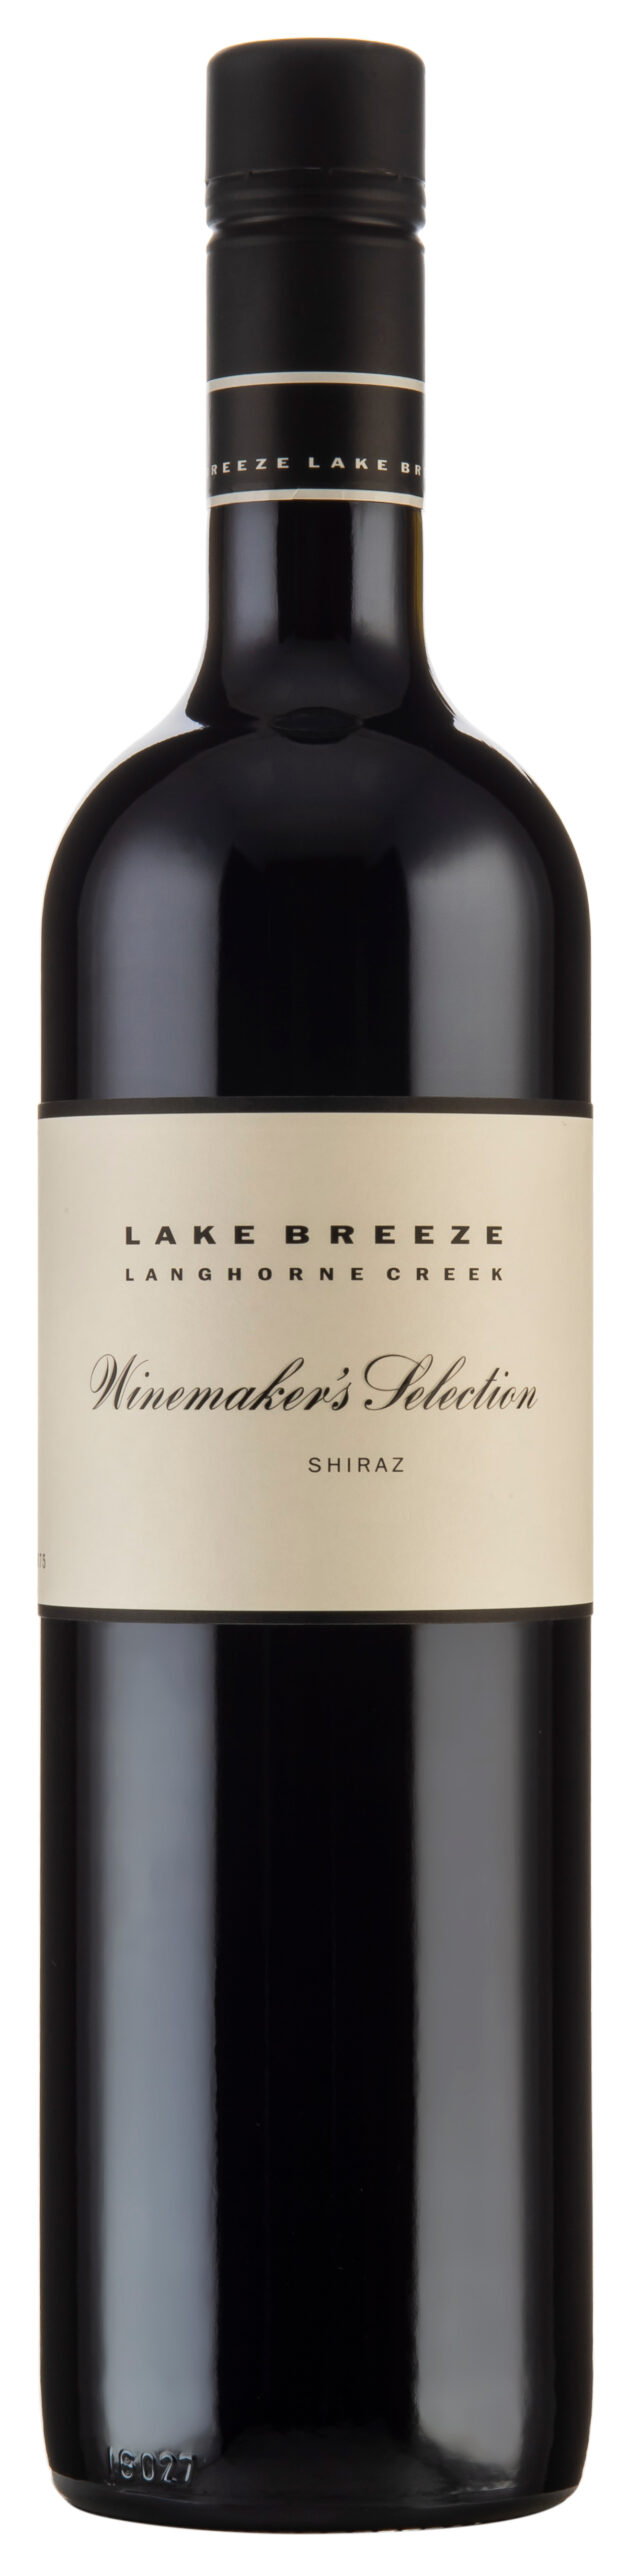 Lake Breeze Winemakr's Shiraz NV